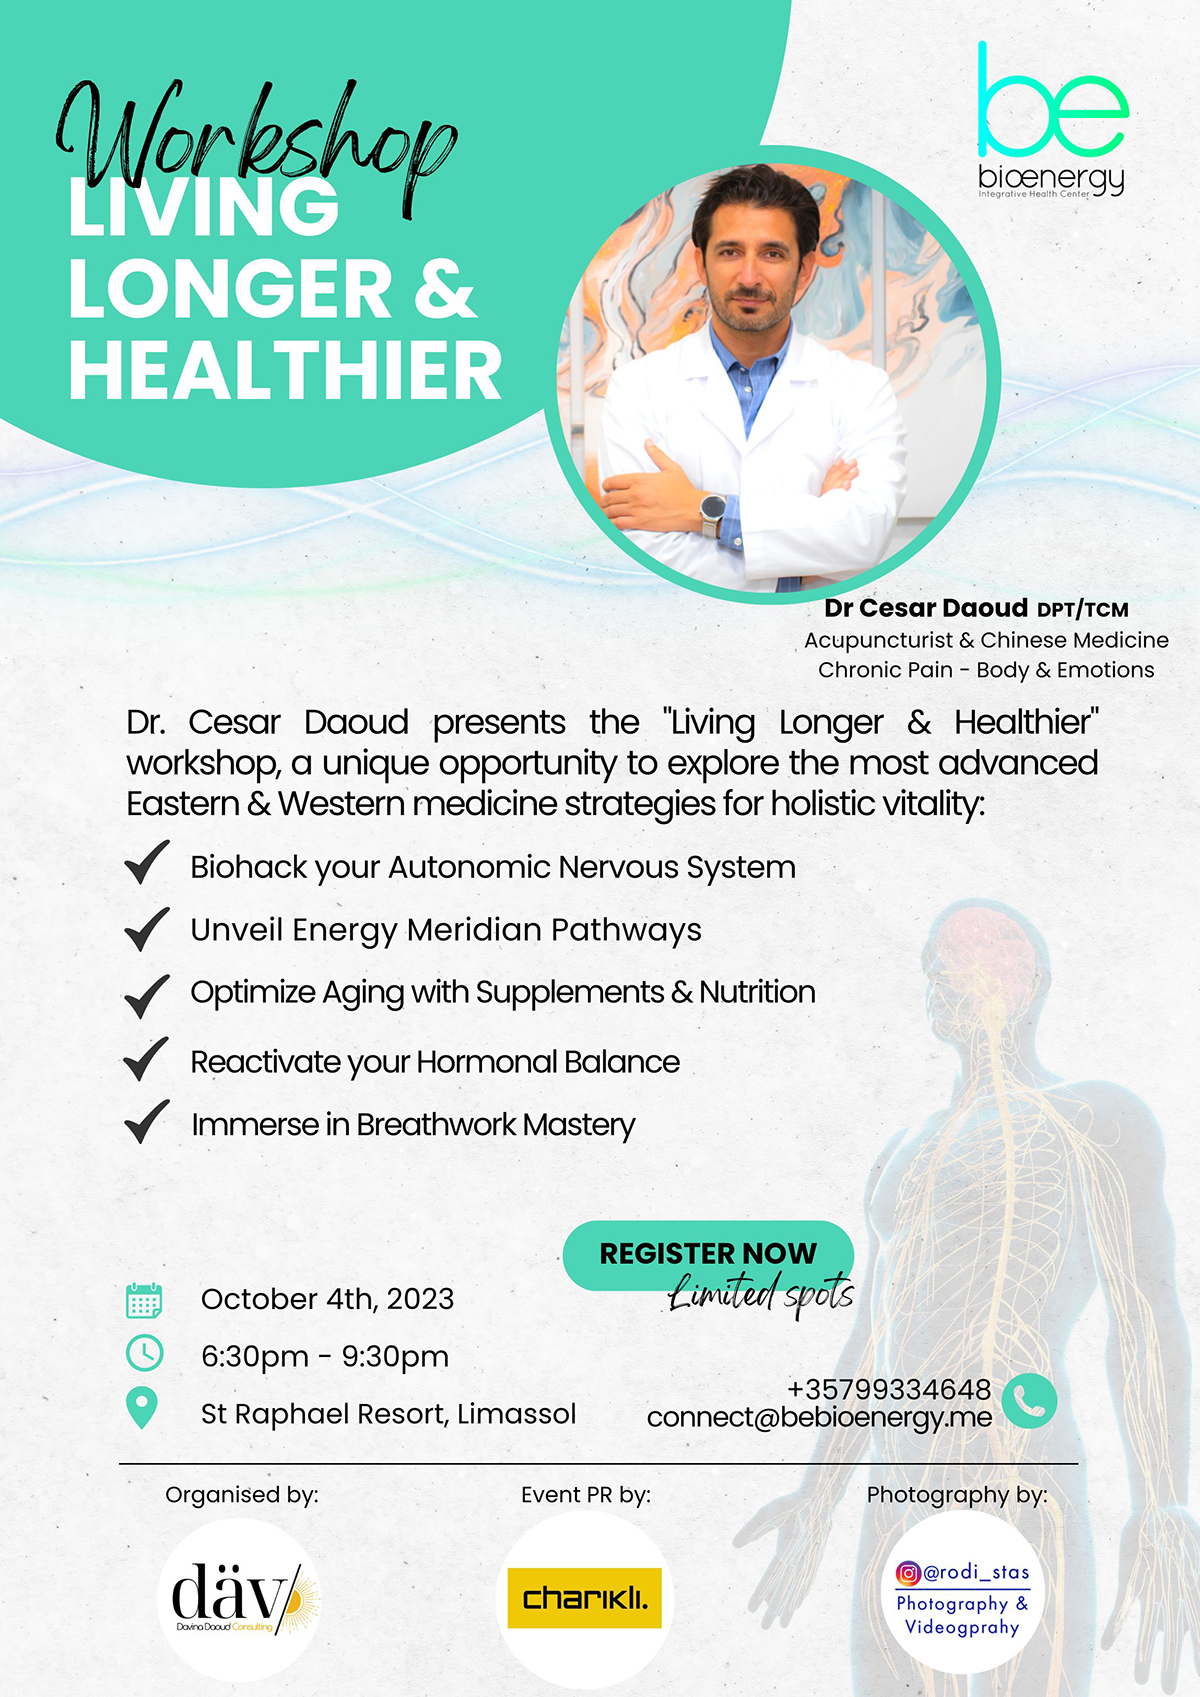 LIVING LONGER & HEALTHIER WORKSHOP BY DR CESAR DAOUD 